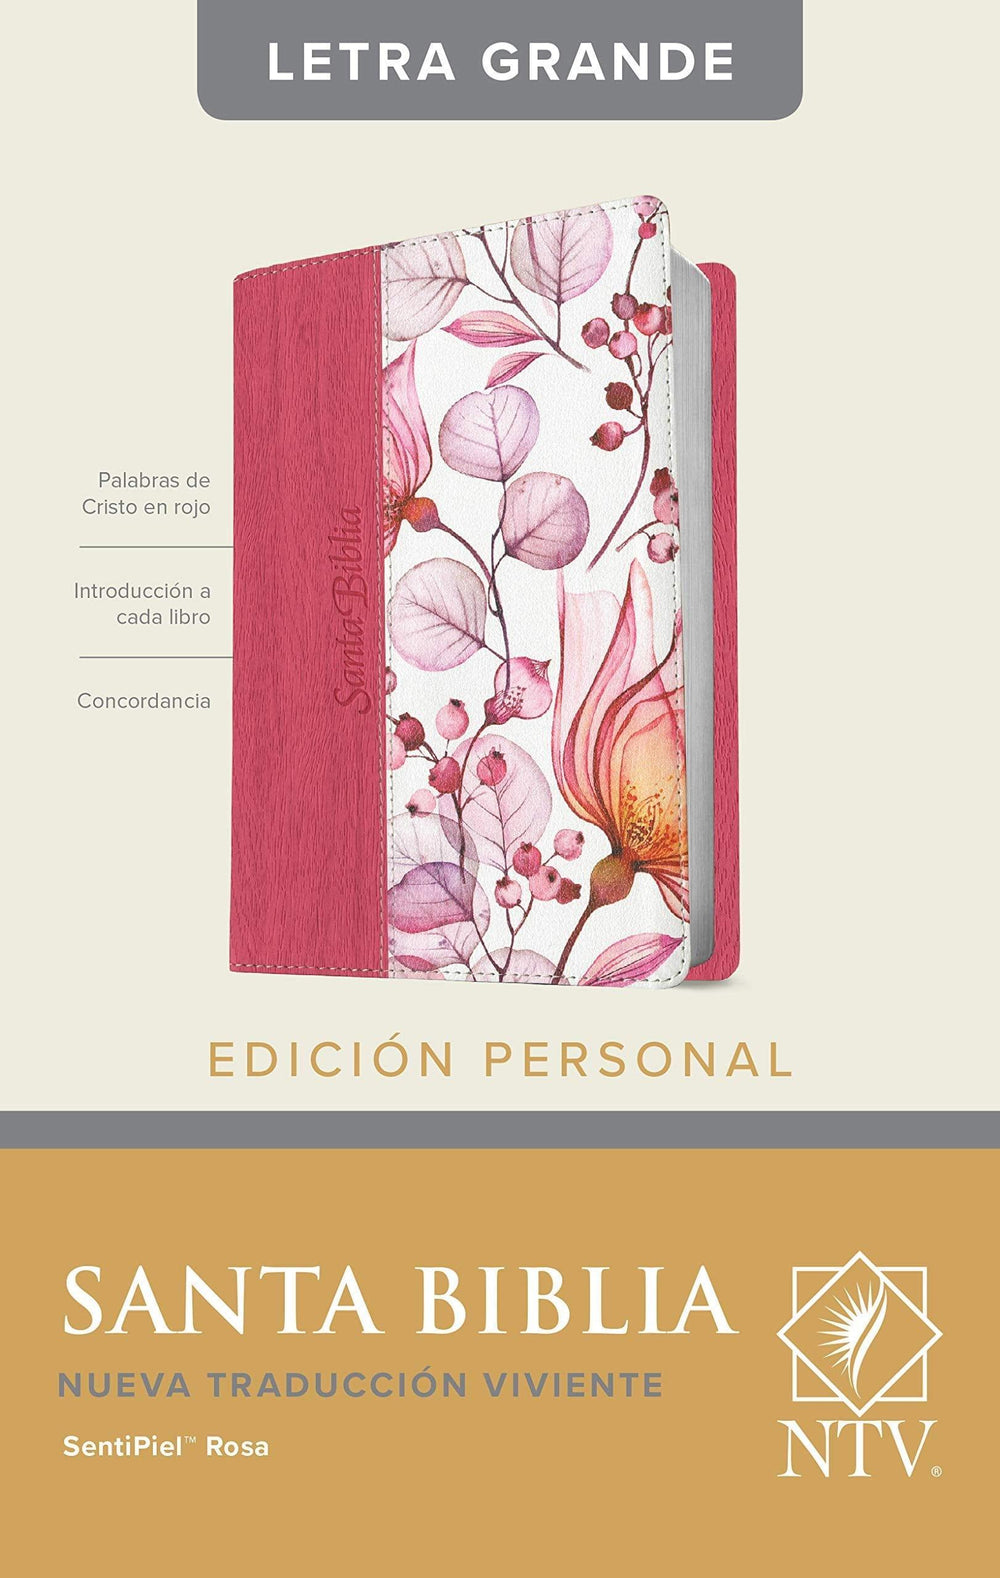 Santa Biblia NTV, Edición personal, letra grande - Pura Vida Books